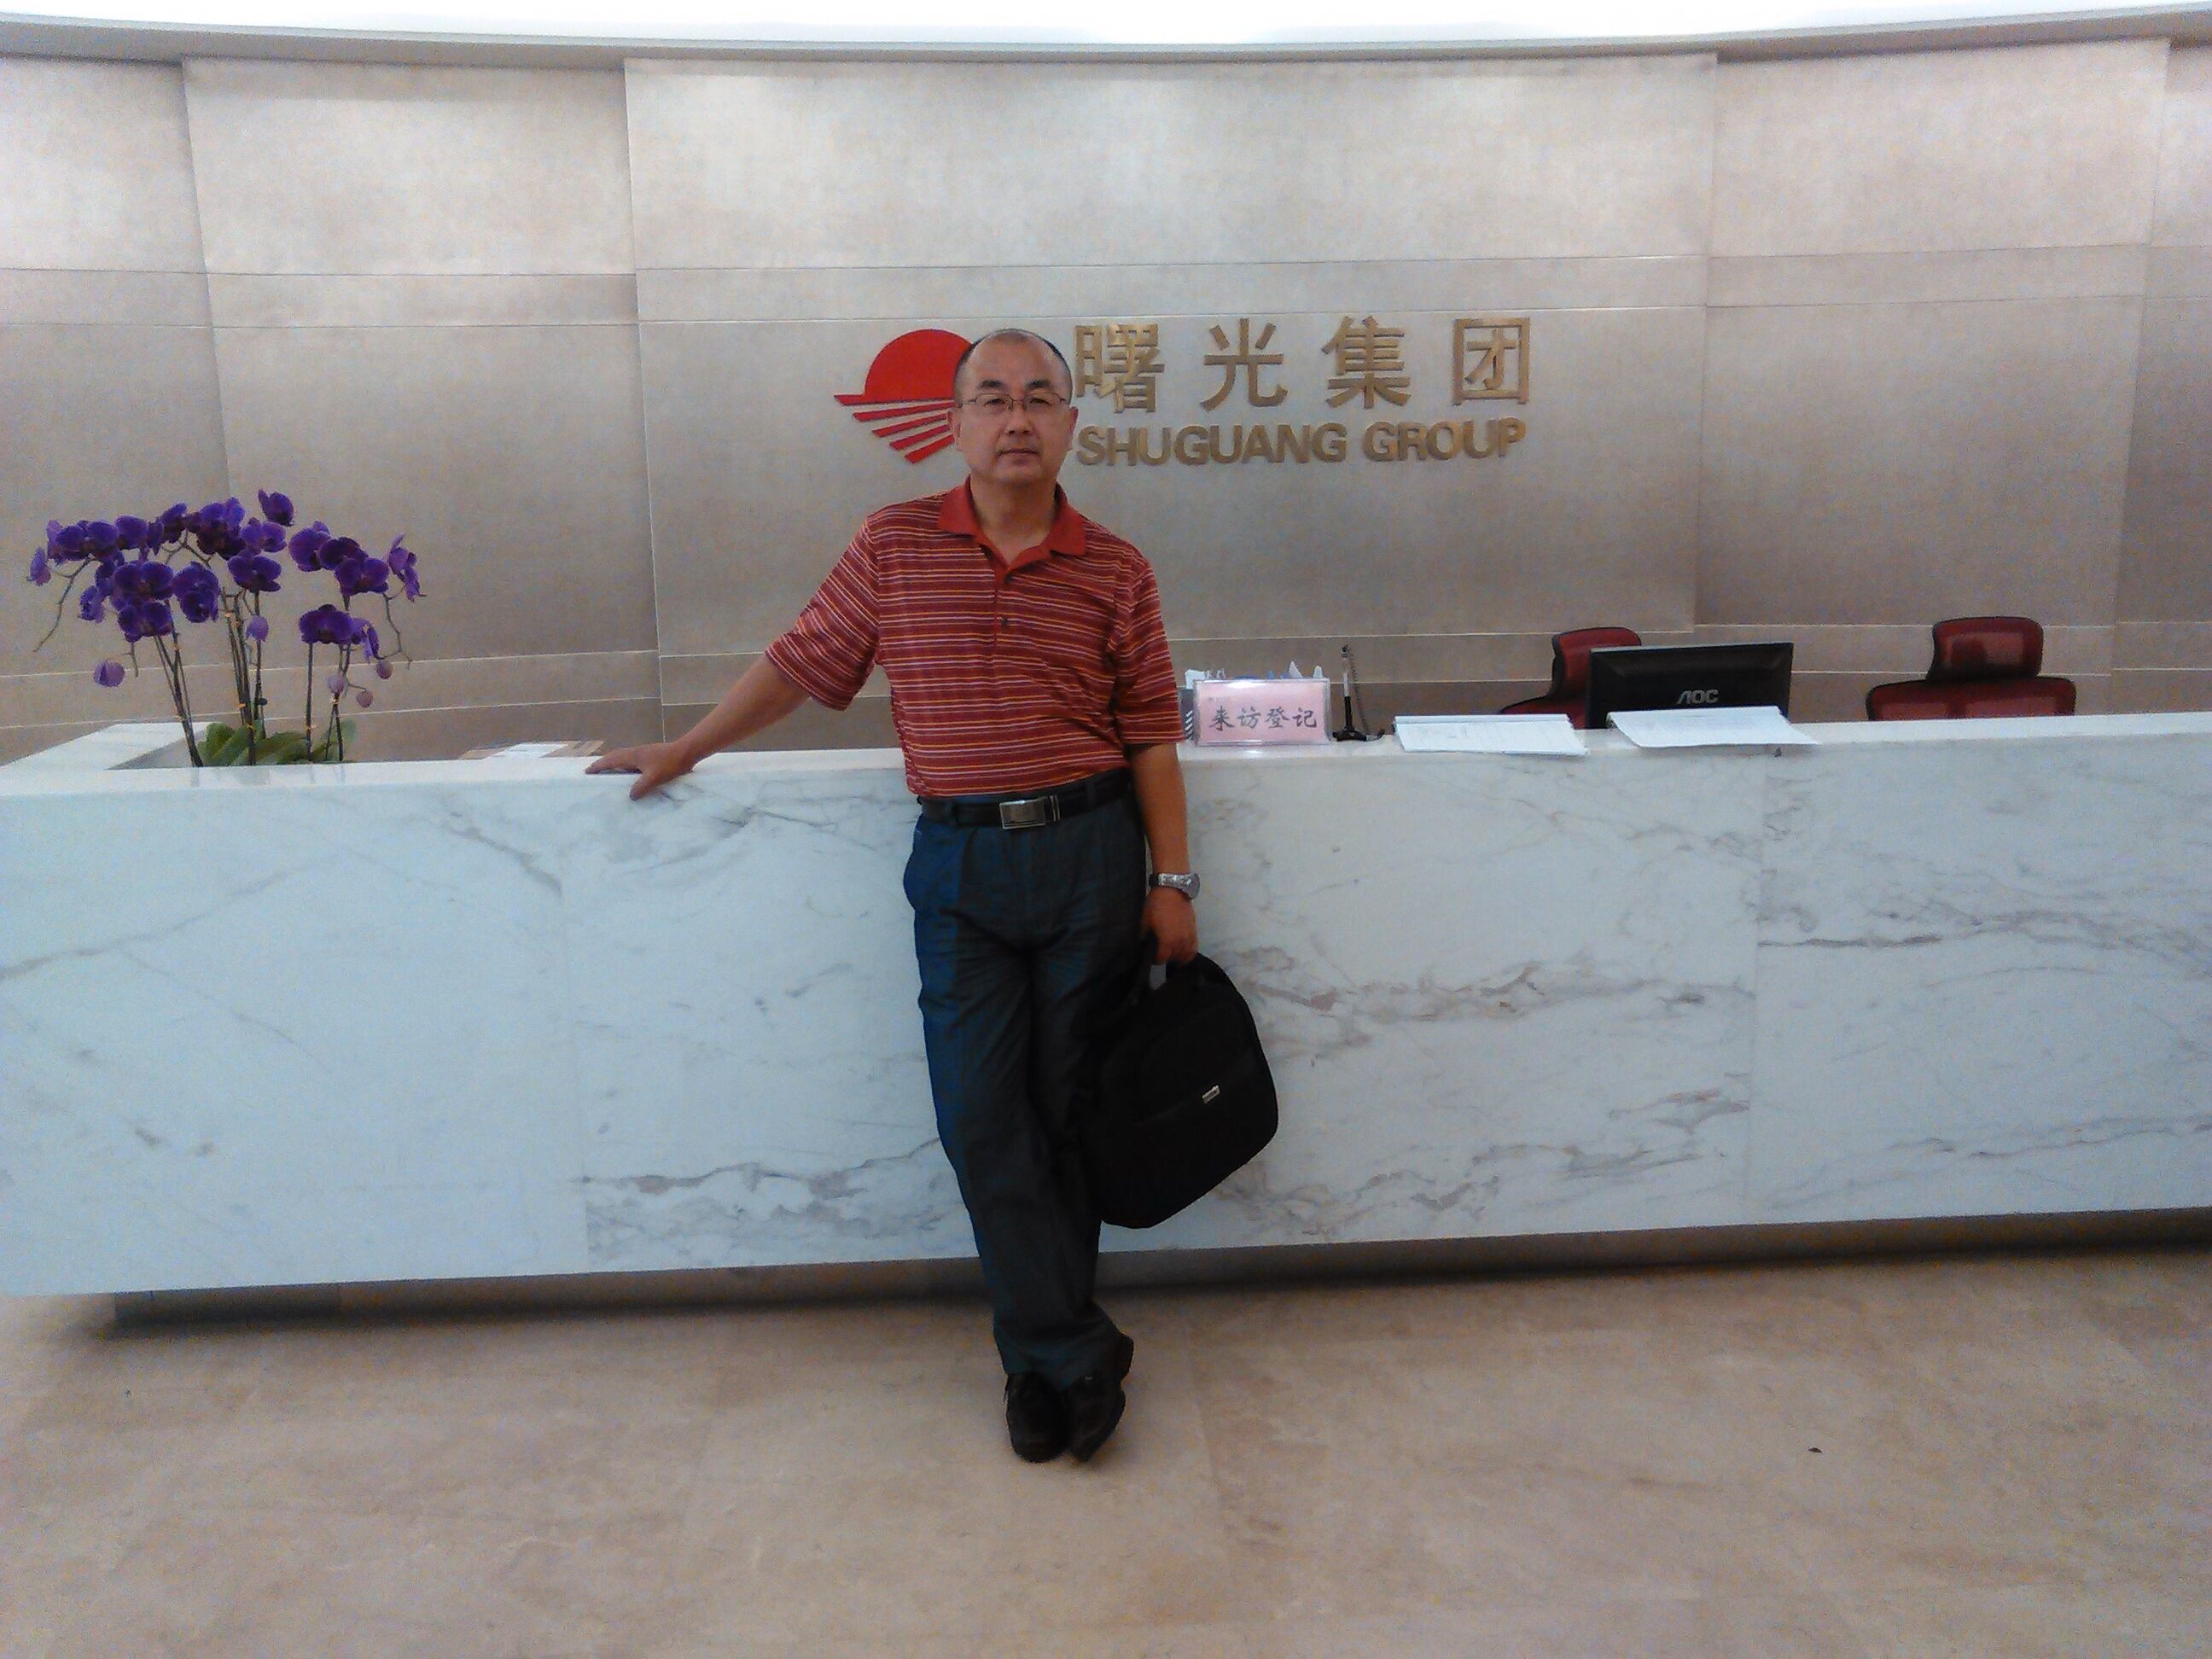 Shuguang Group Building